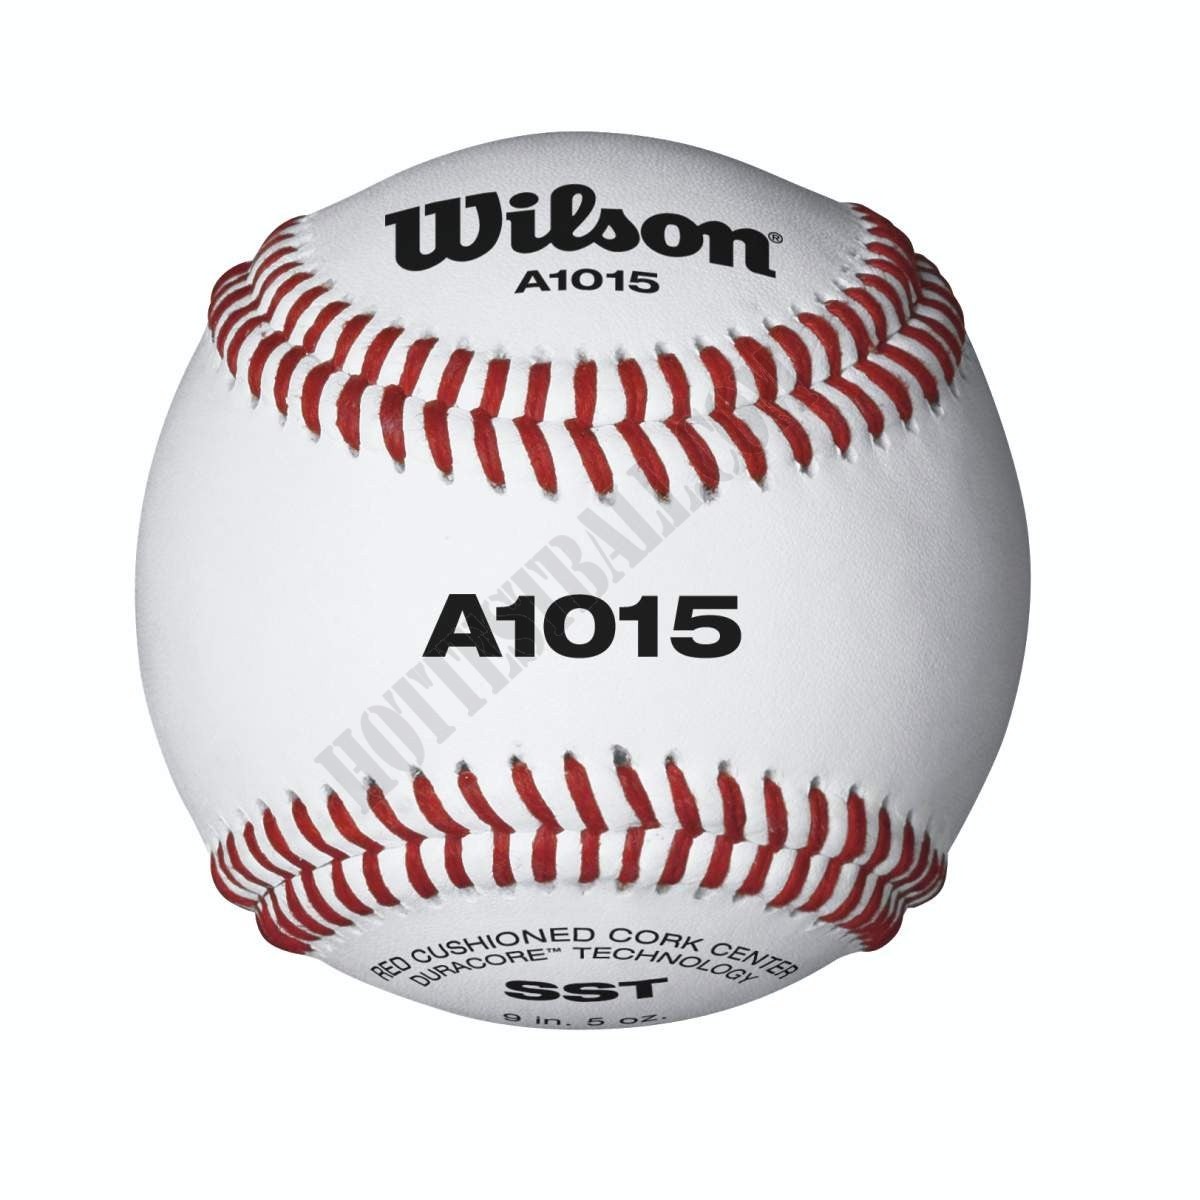 A1015 Pro Series SST Baseballs - Wilson Discount Store - -0